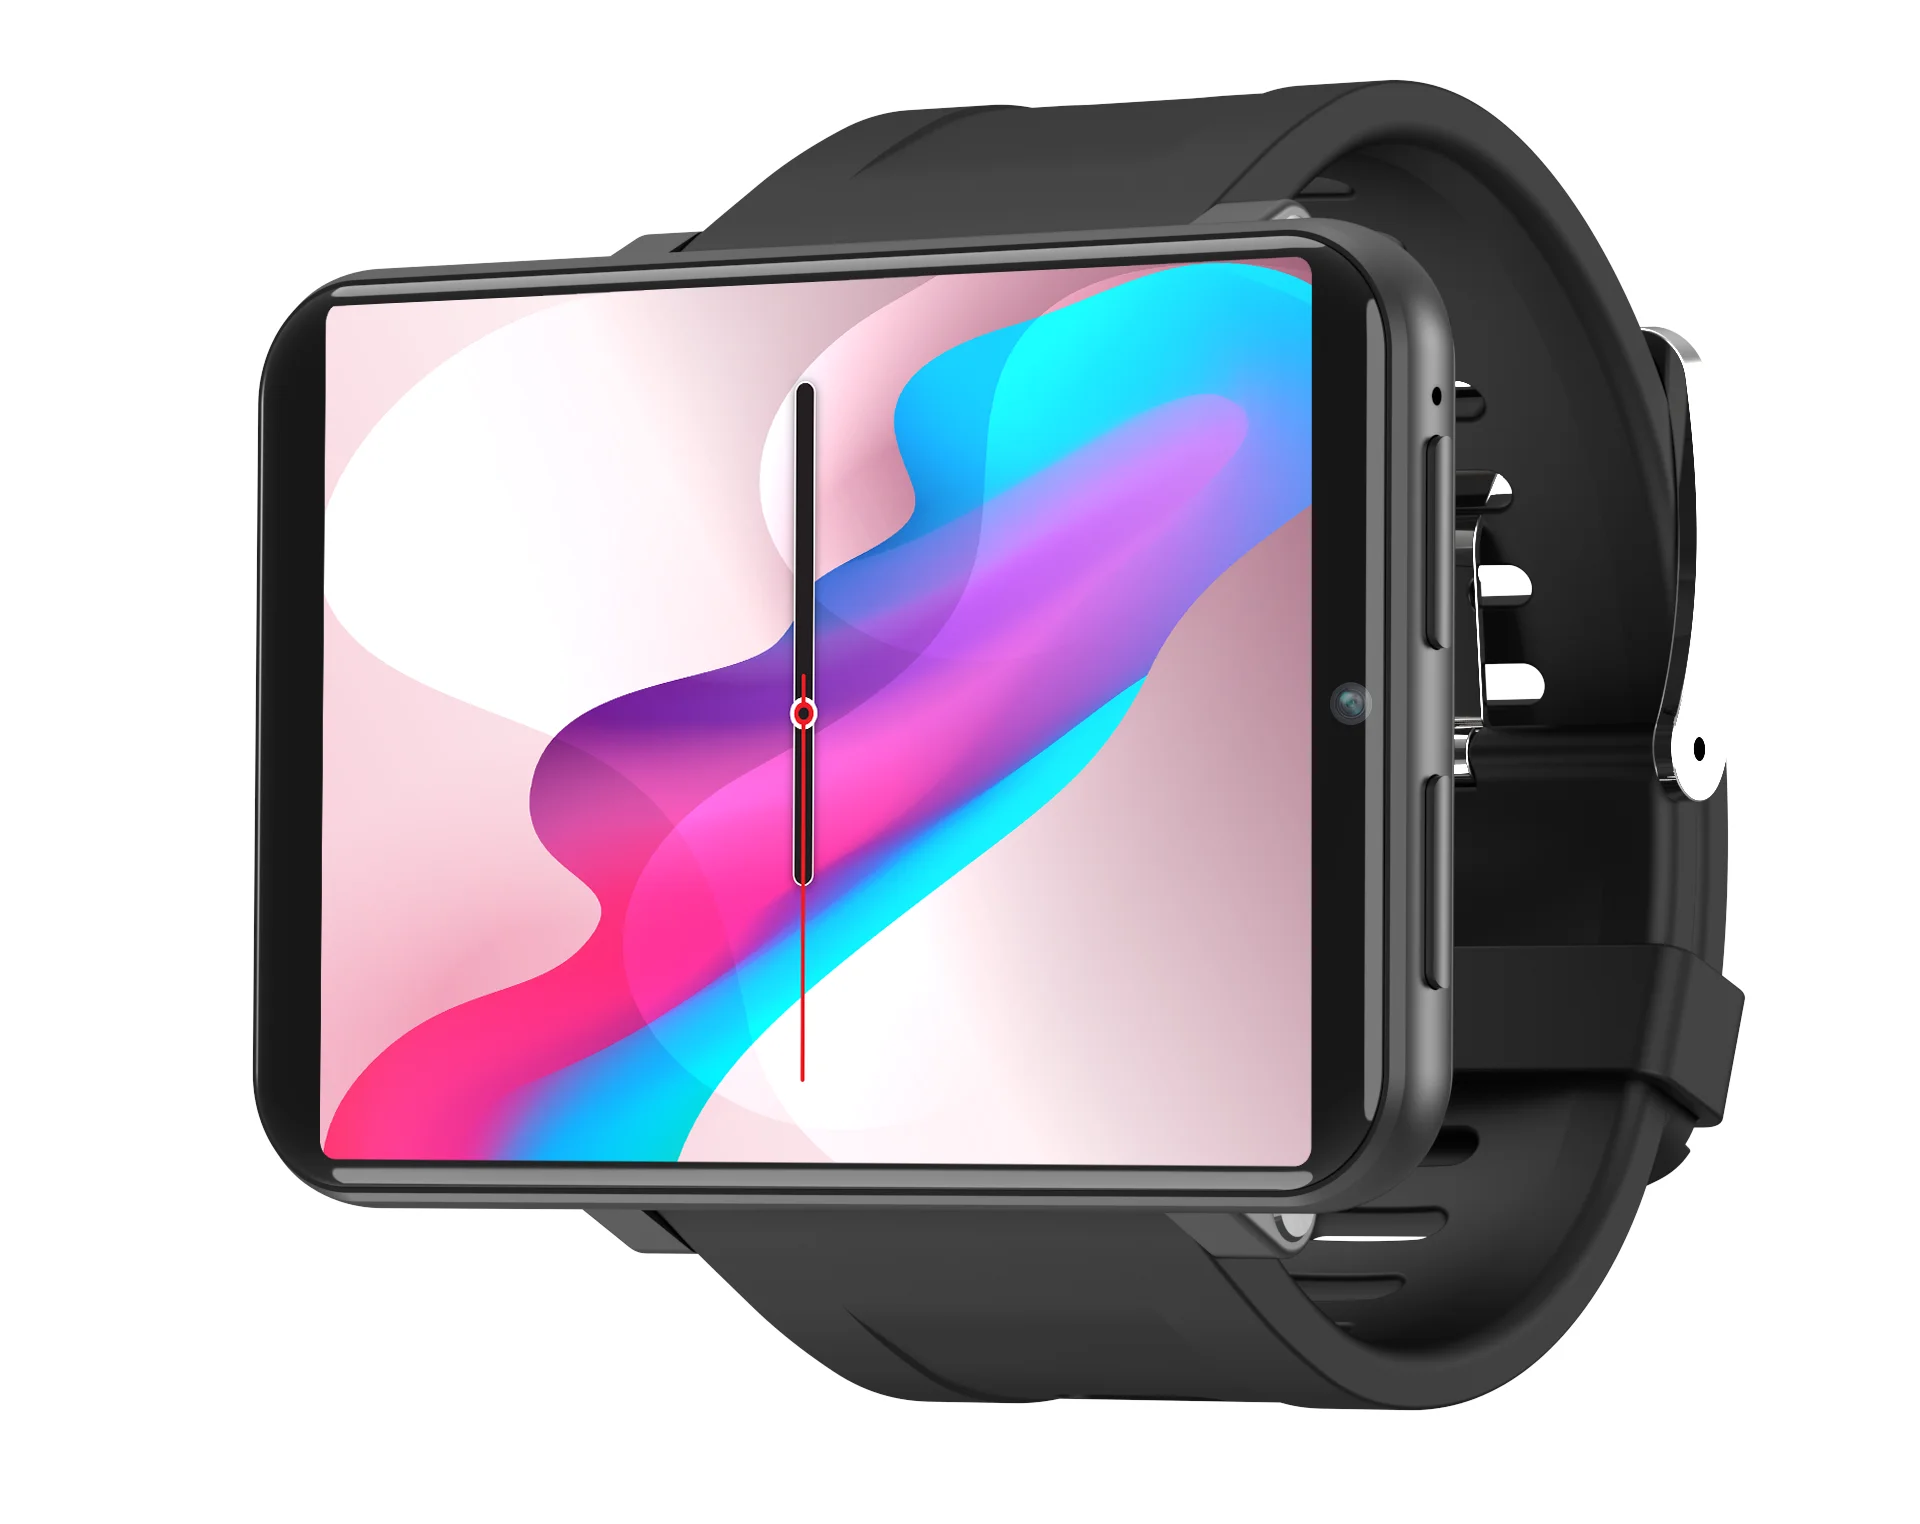 

Smart Watch DM100 4G LTE 1GB 16GB Watch Phone 2.86 Inch Big Screen Android Digital Watch with Camera, Black silver